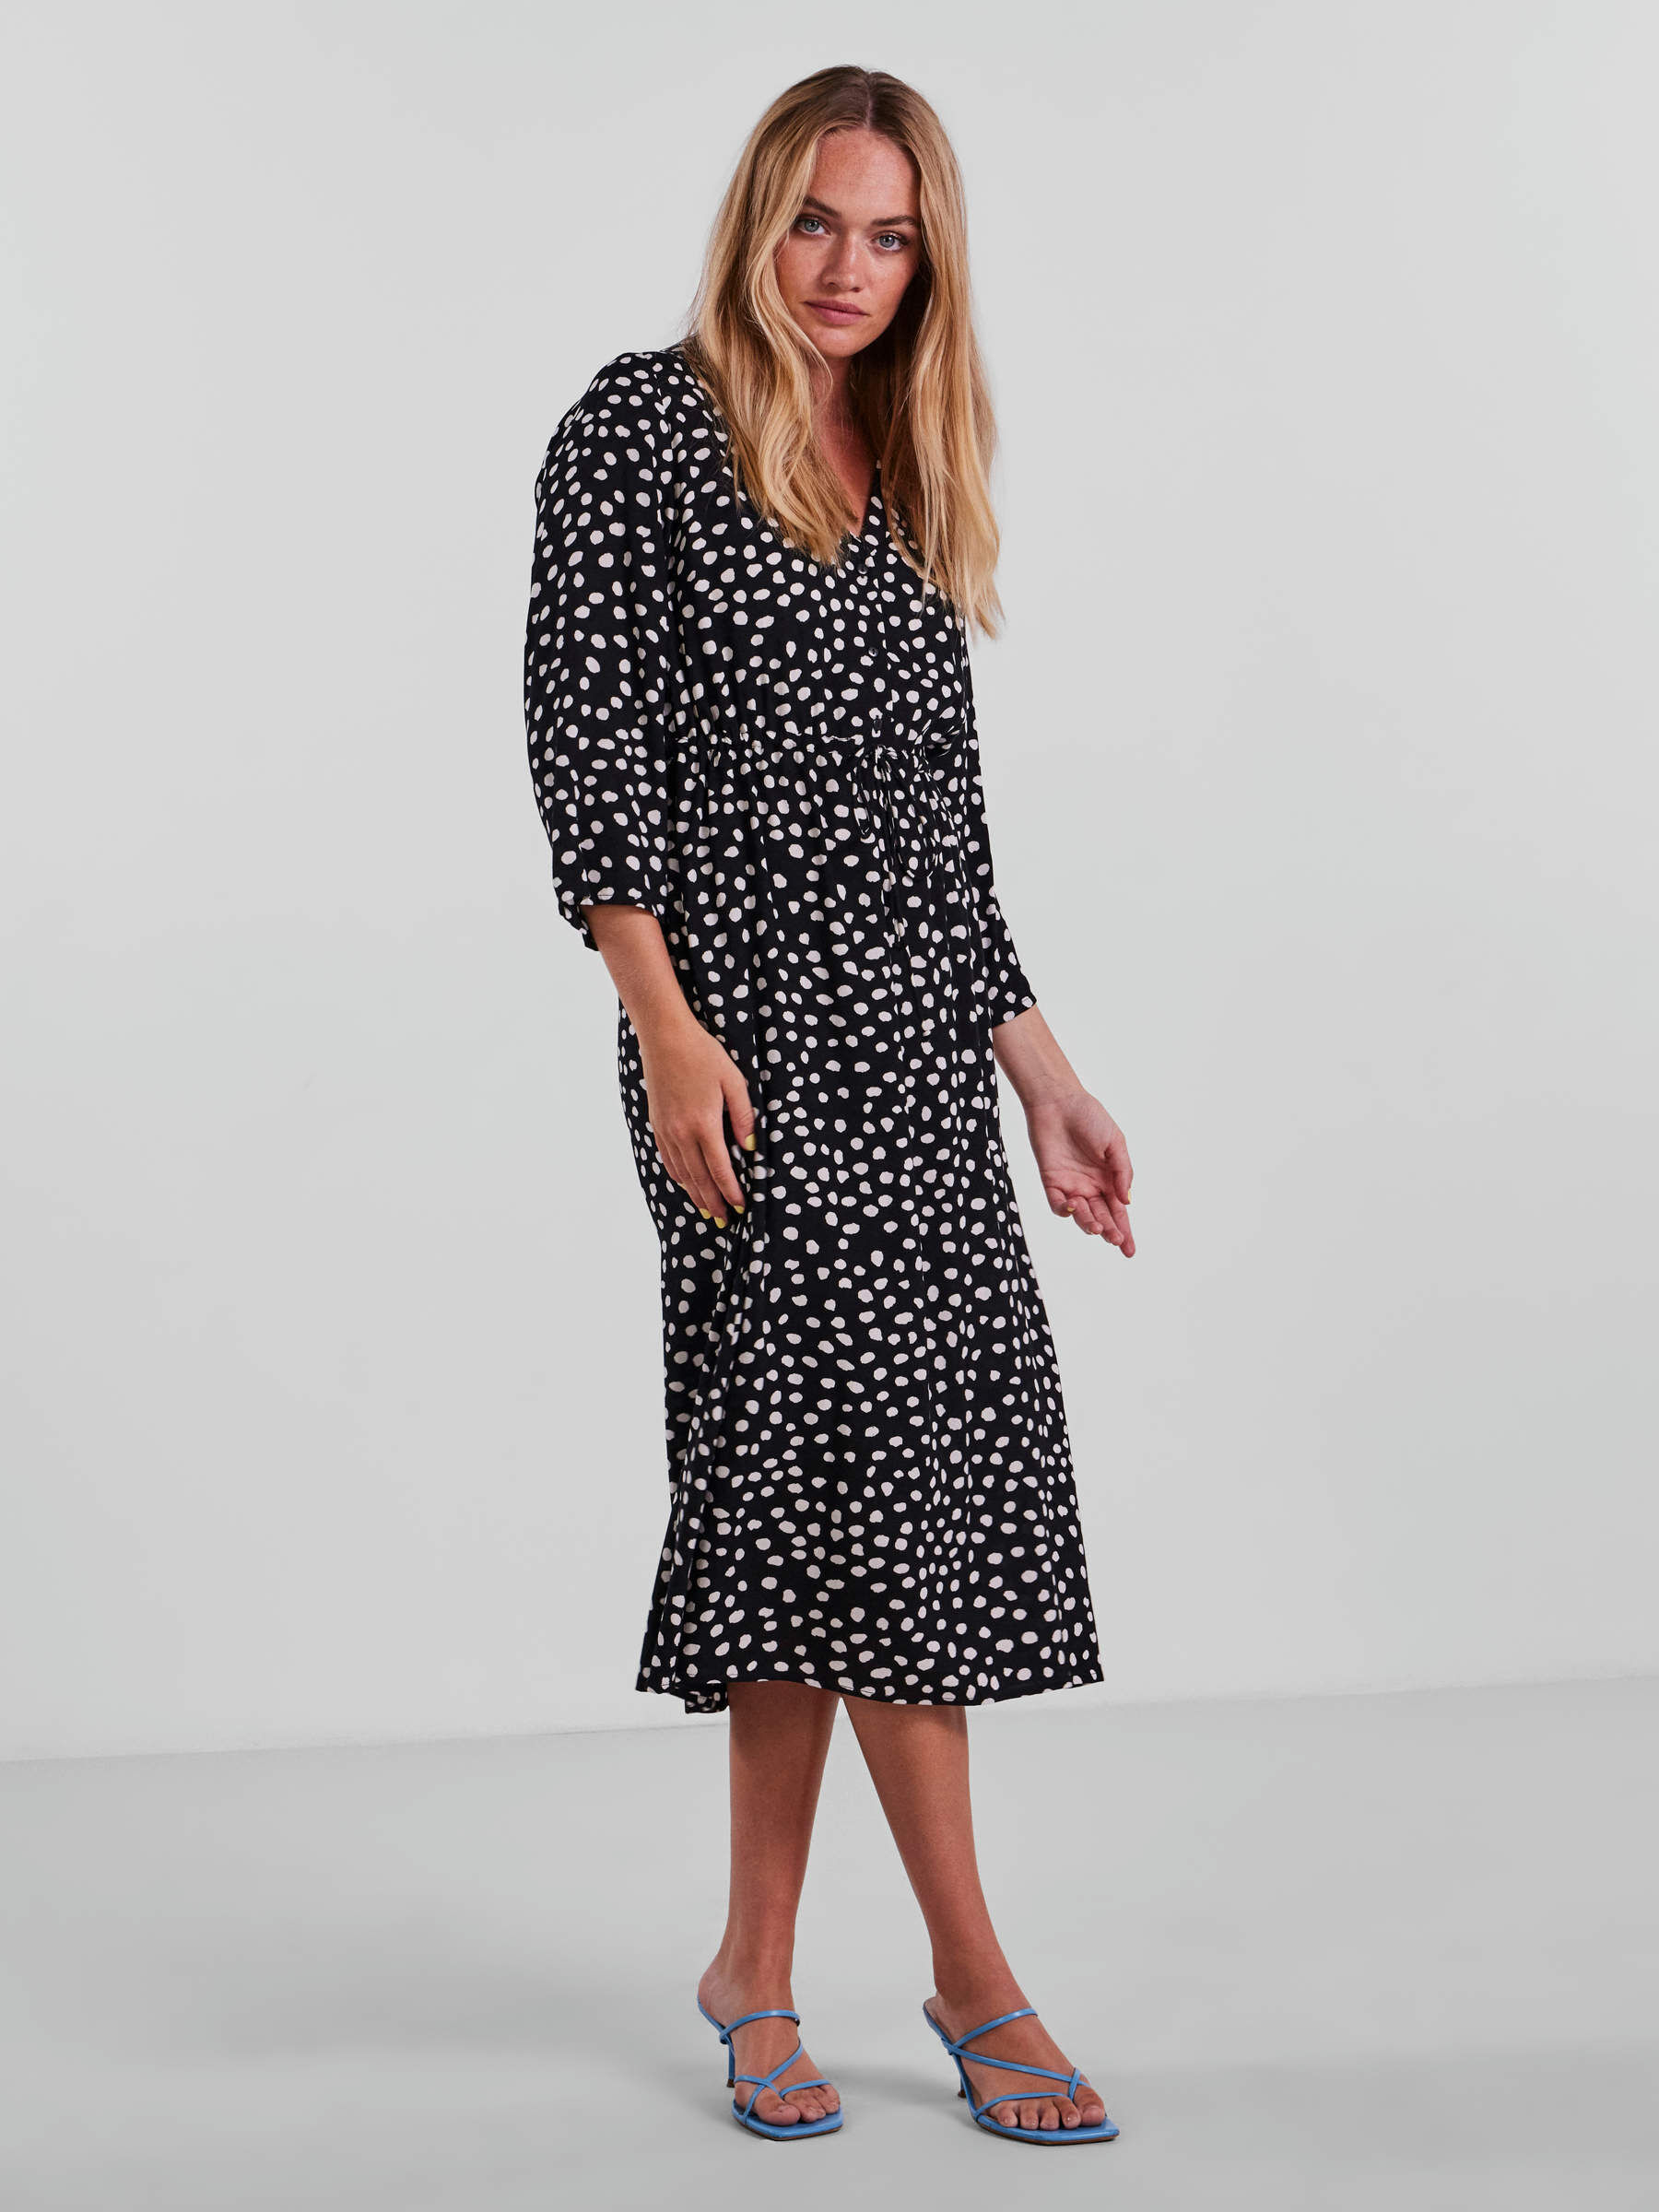 Midi dresses for women | Shop your trendy midi dresses at the 